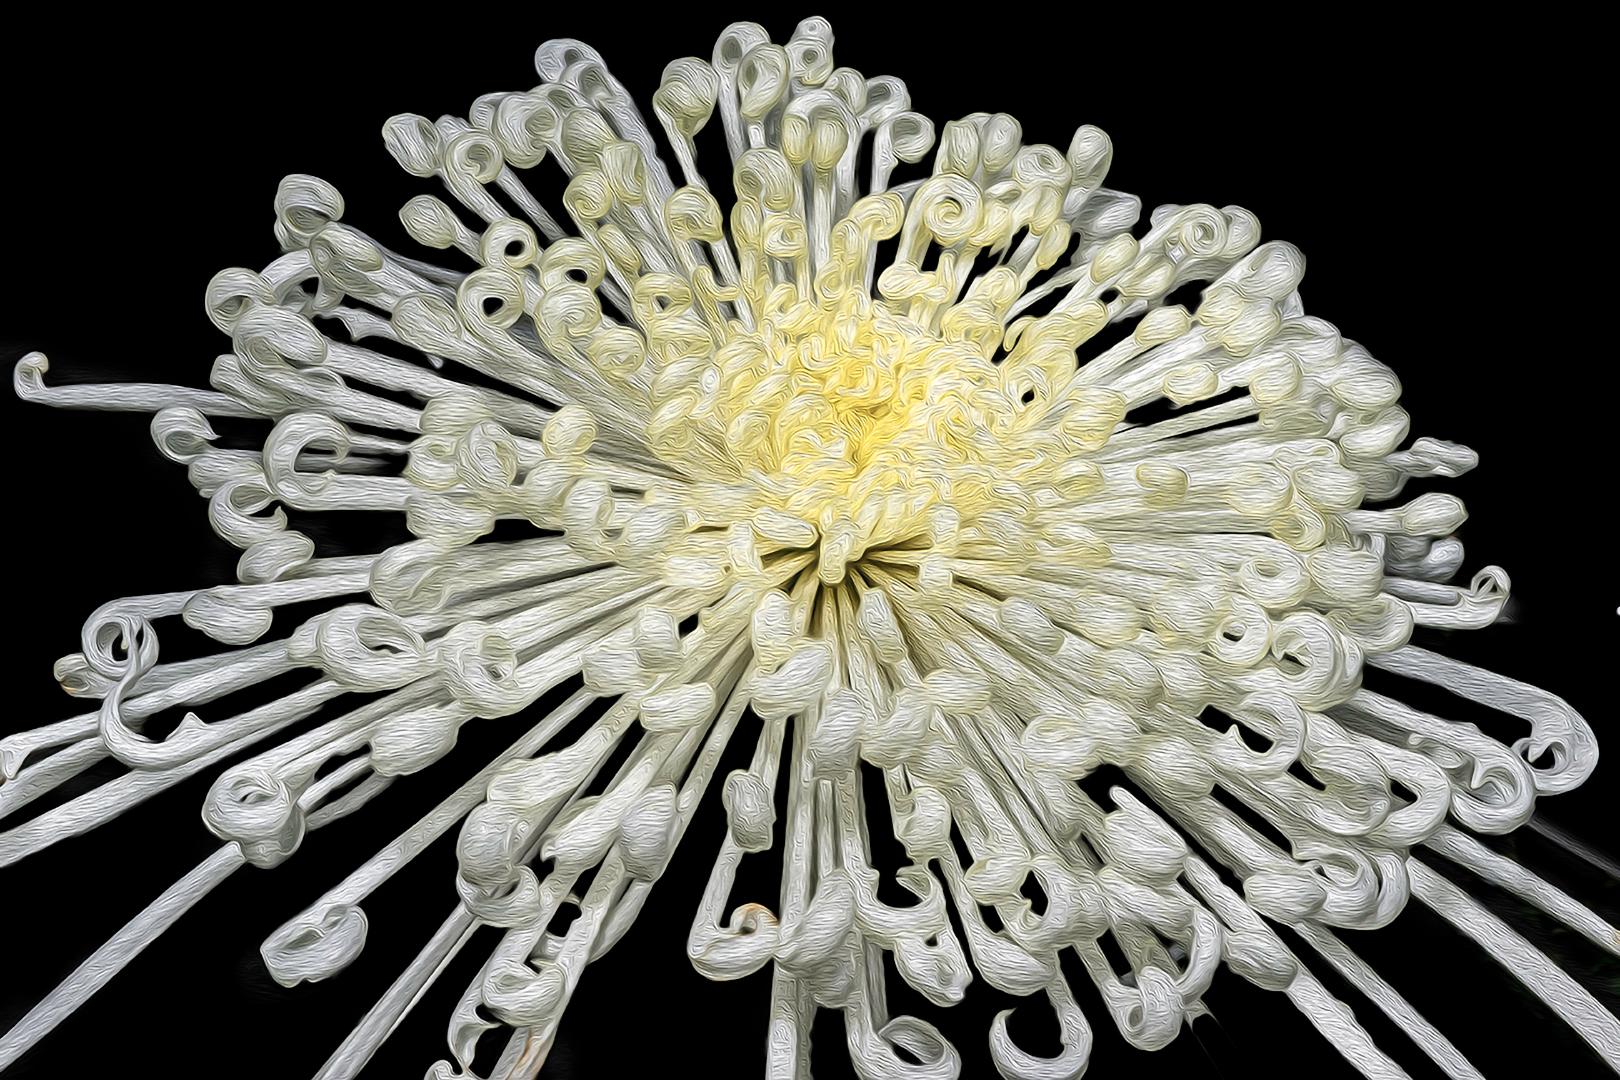 White Chrysanthemum